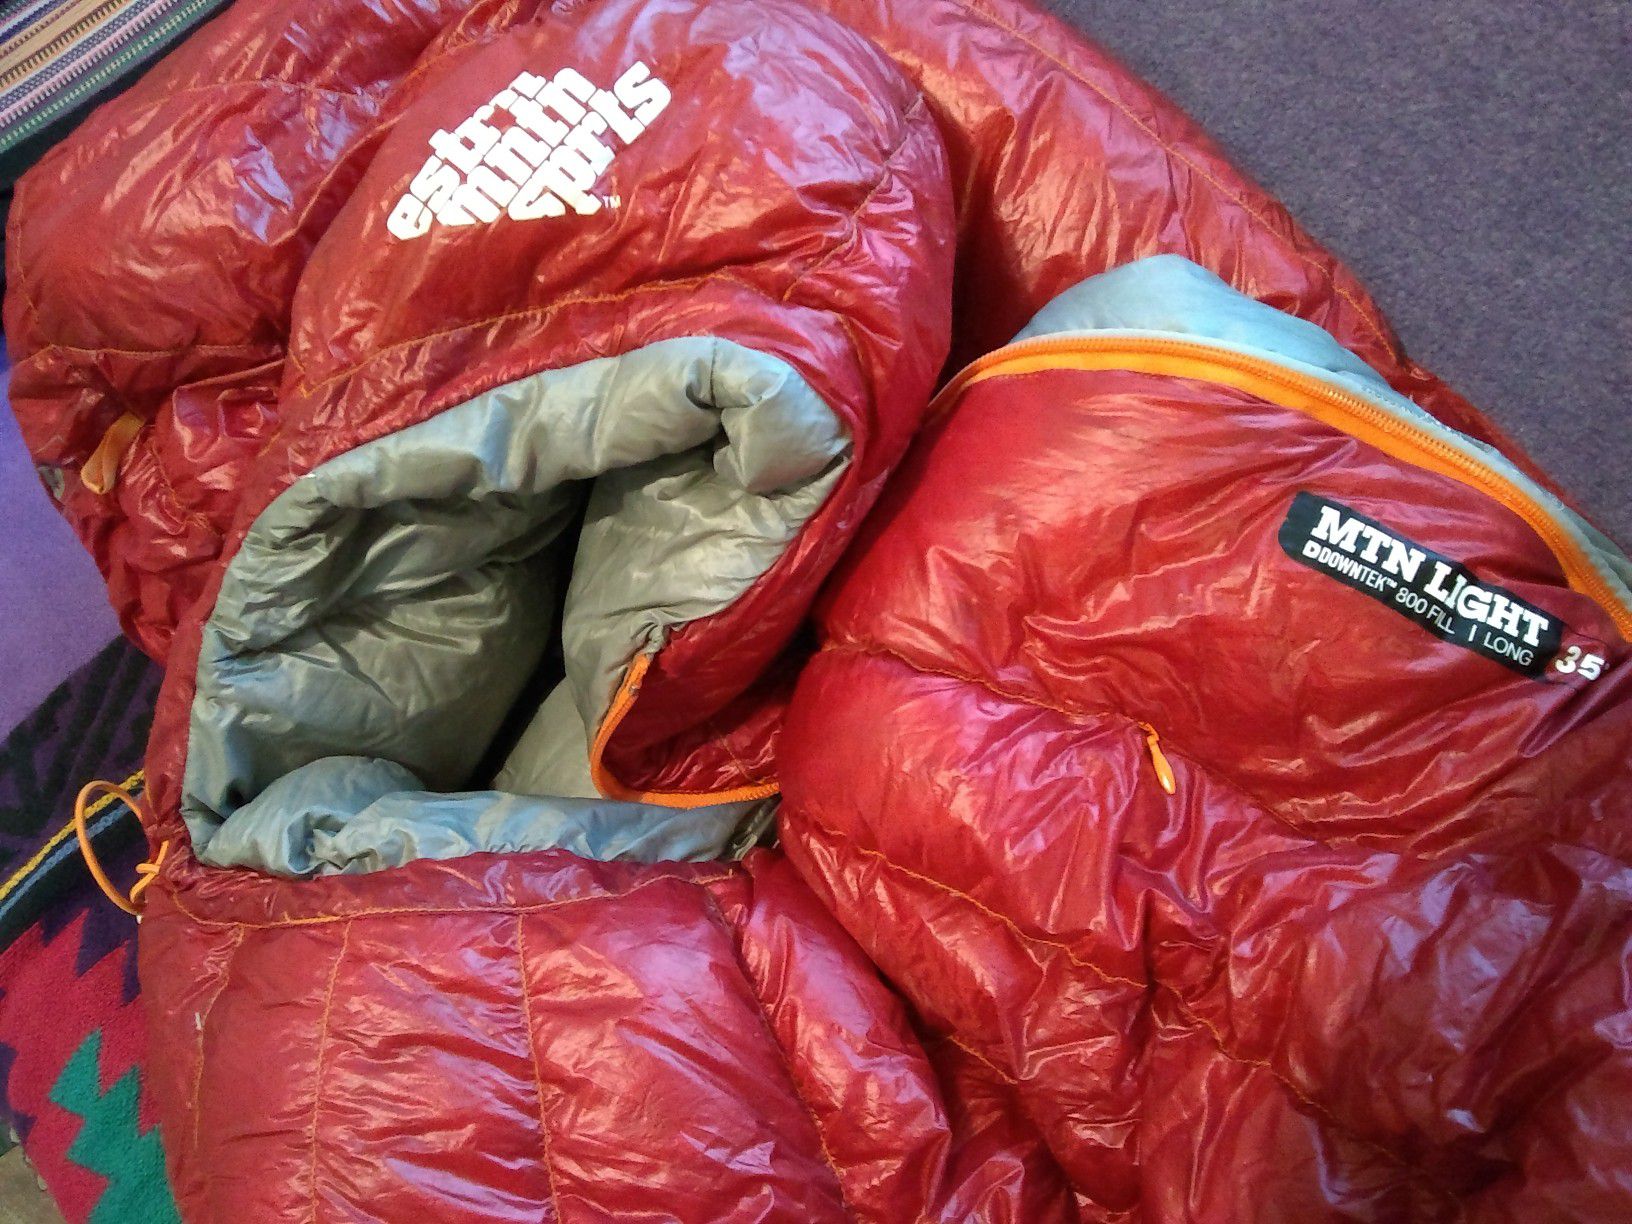 Eastern Mt Sports sleeping bag, new